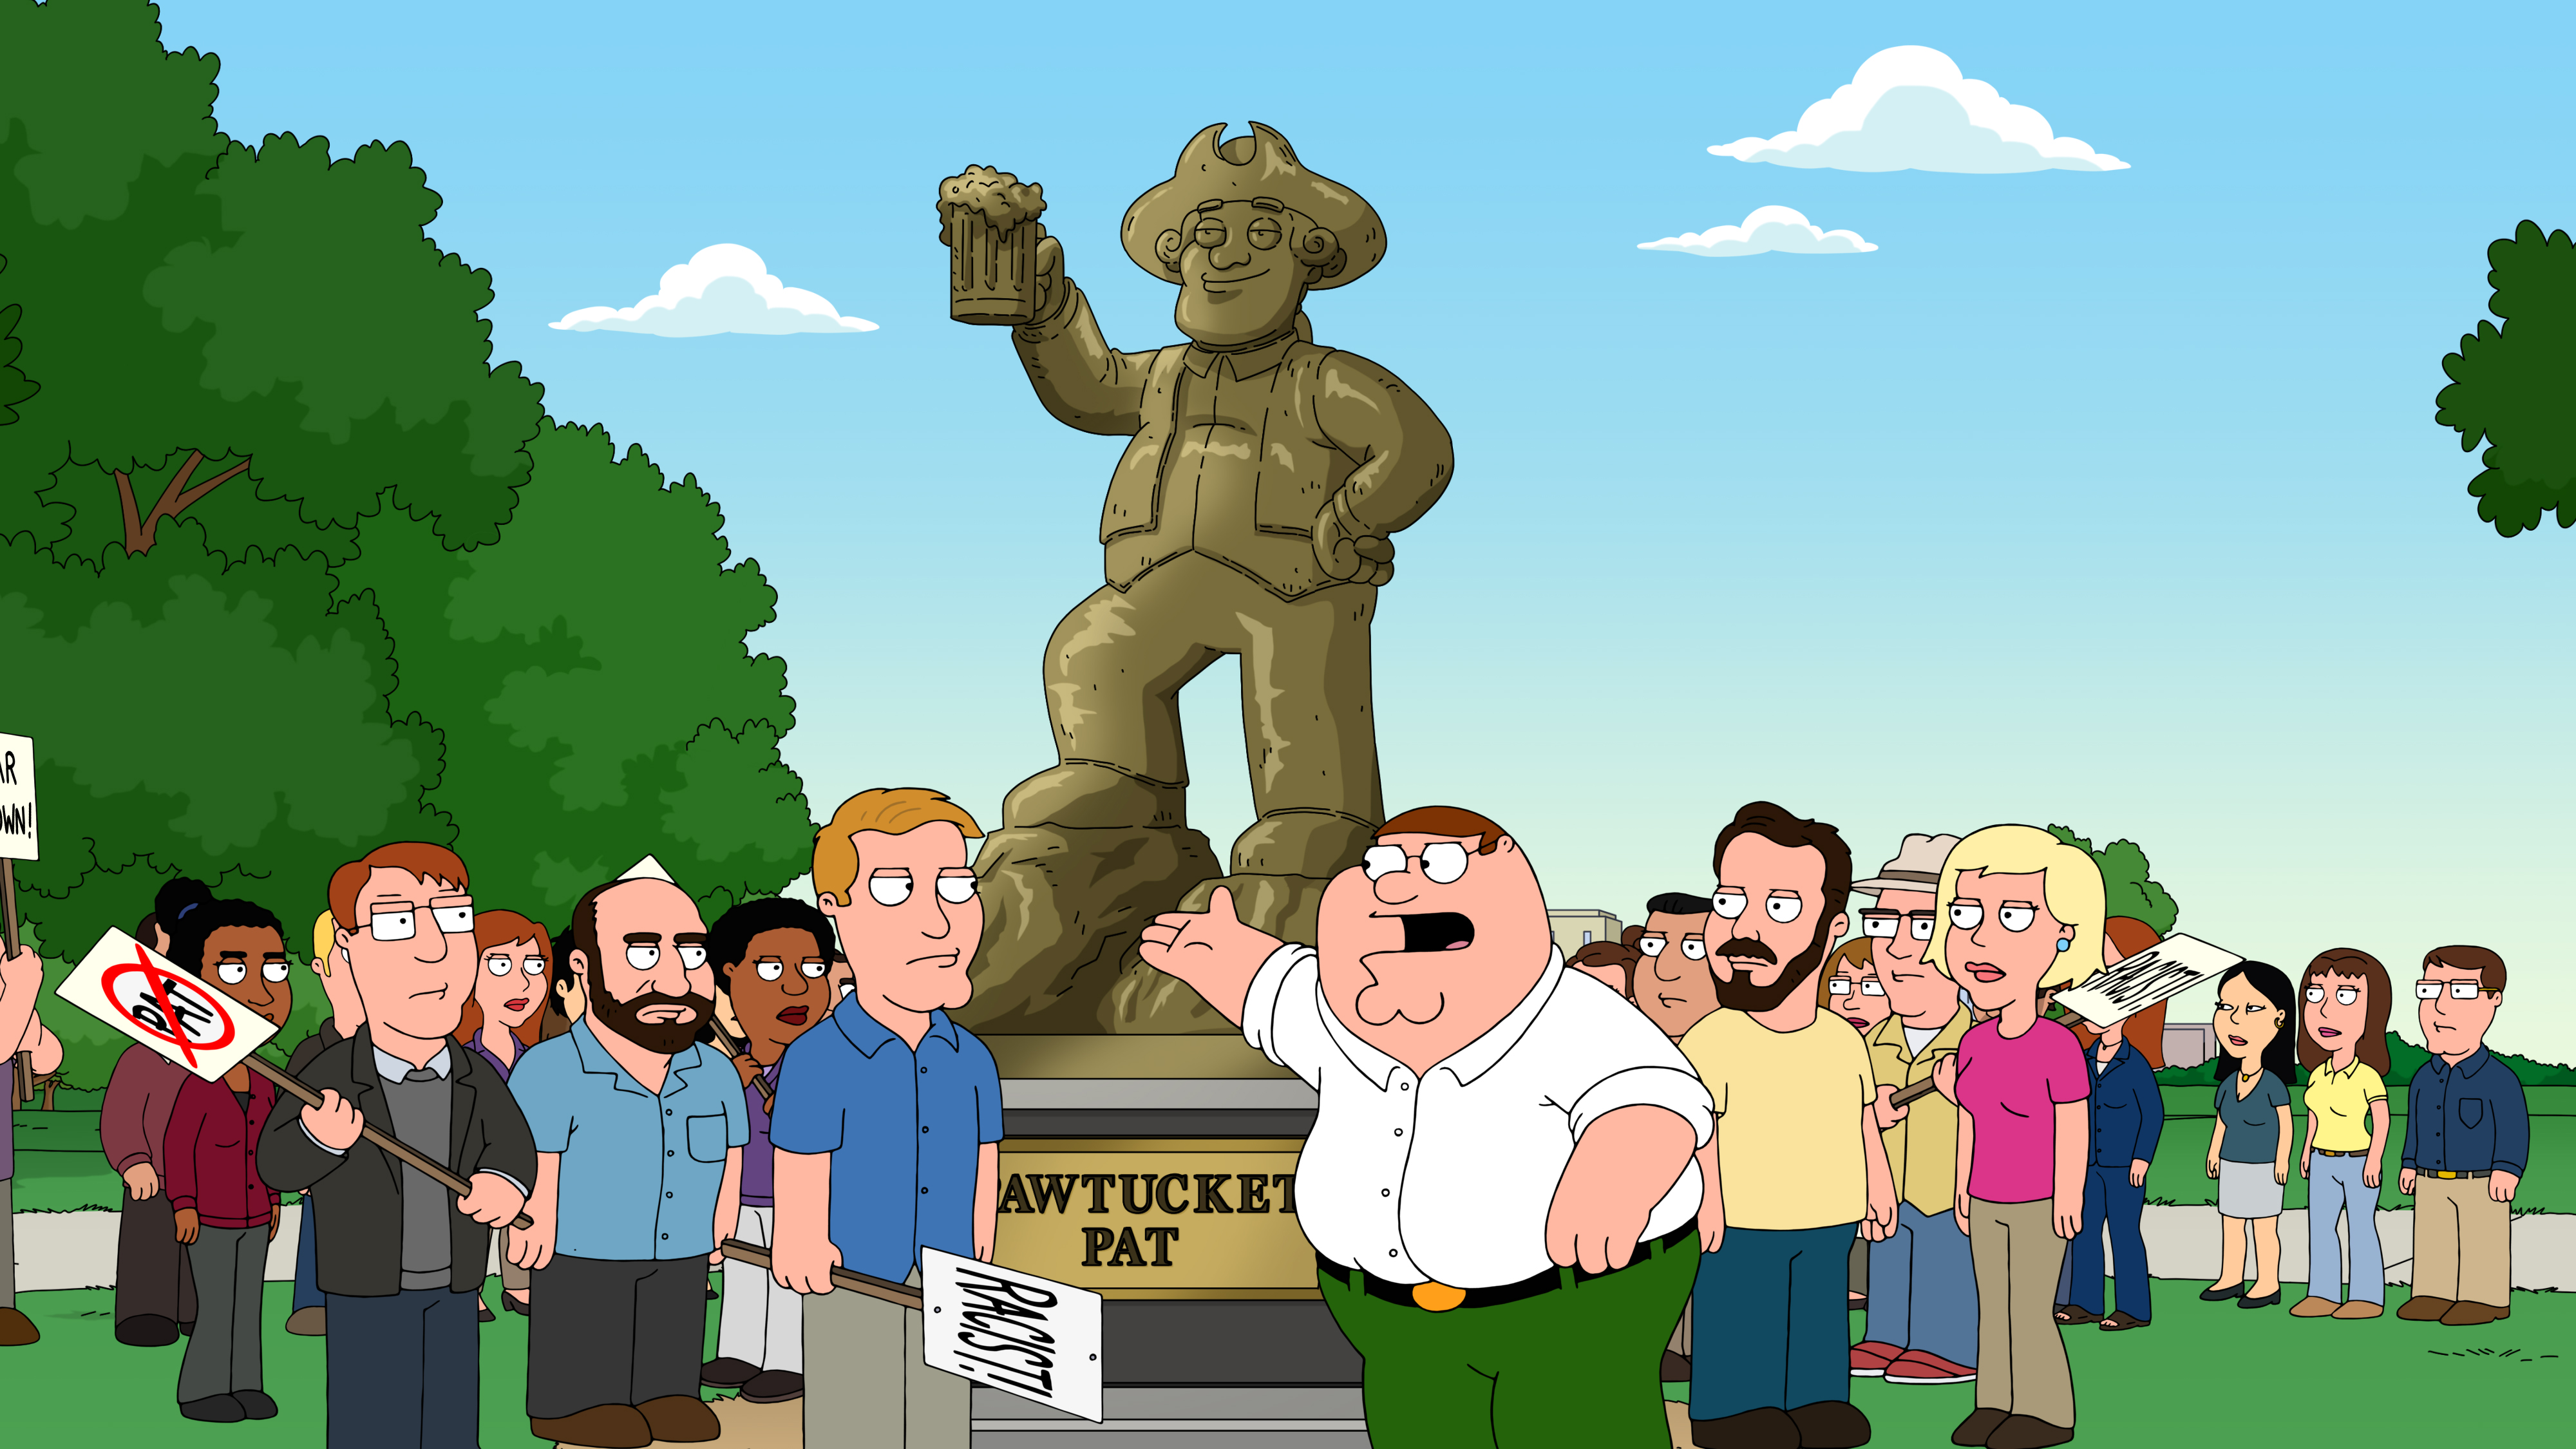 Family Guy: Pawtucket Pat | Season 19 | Episode 8